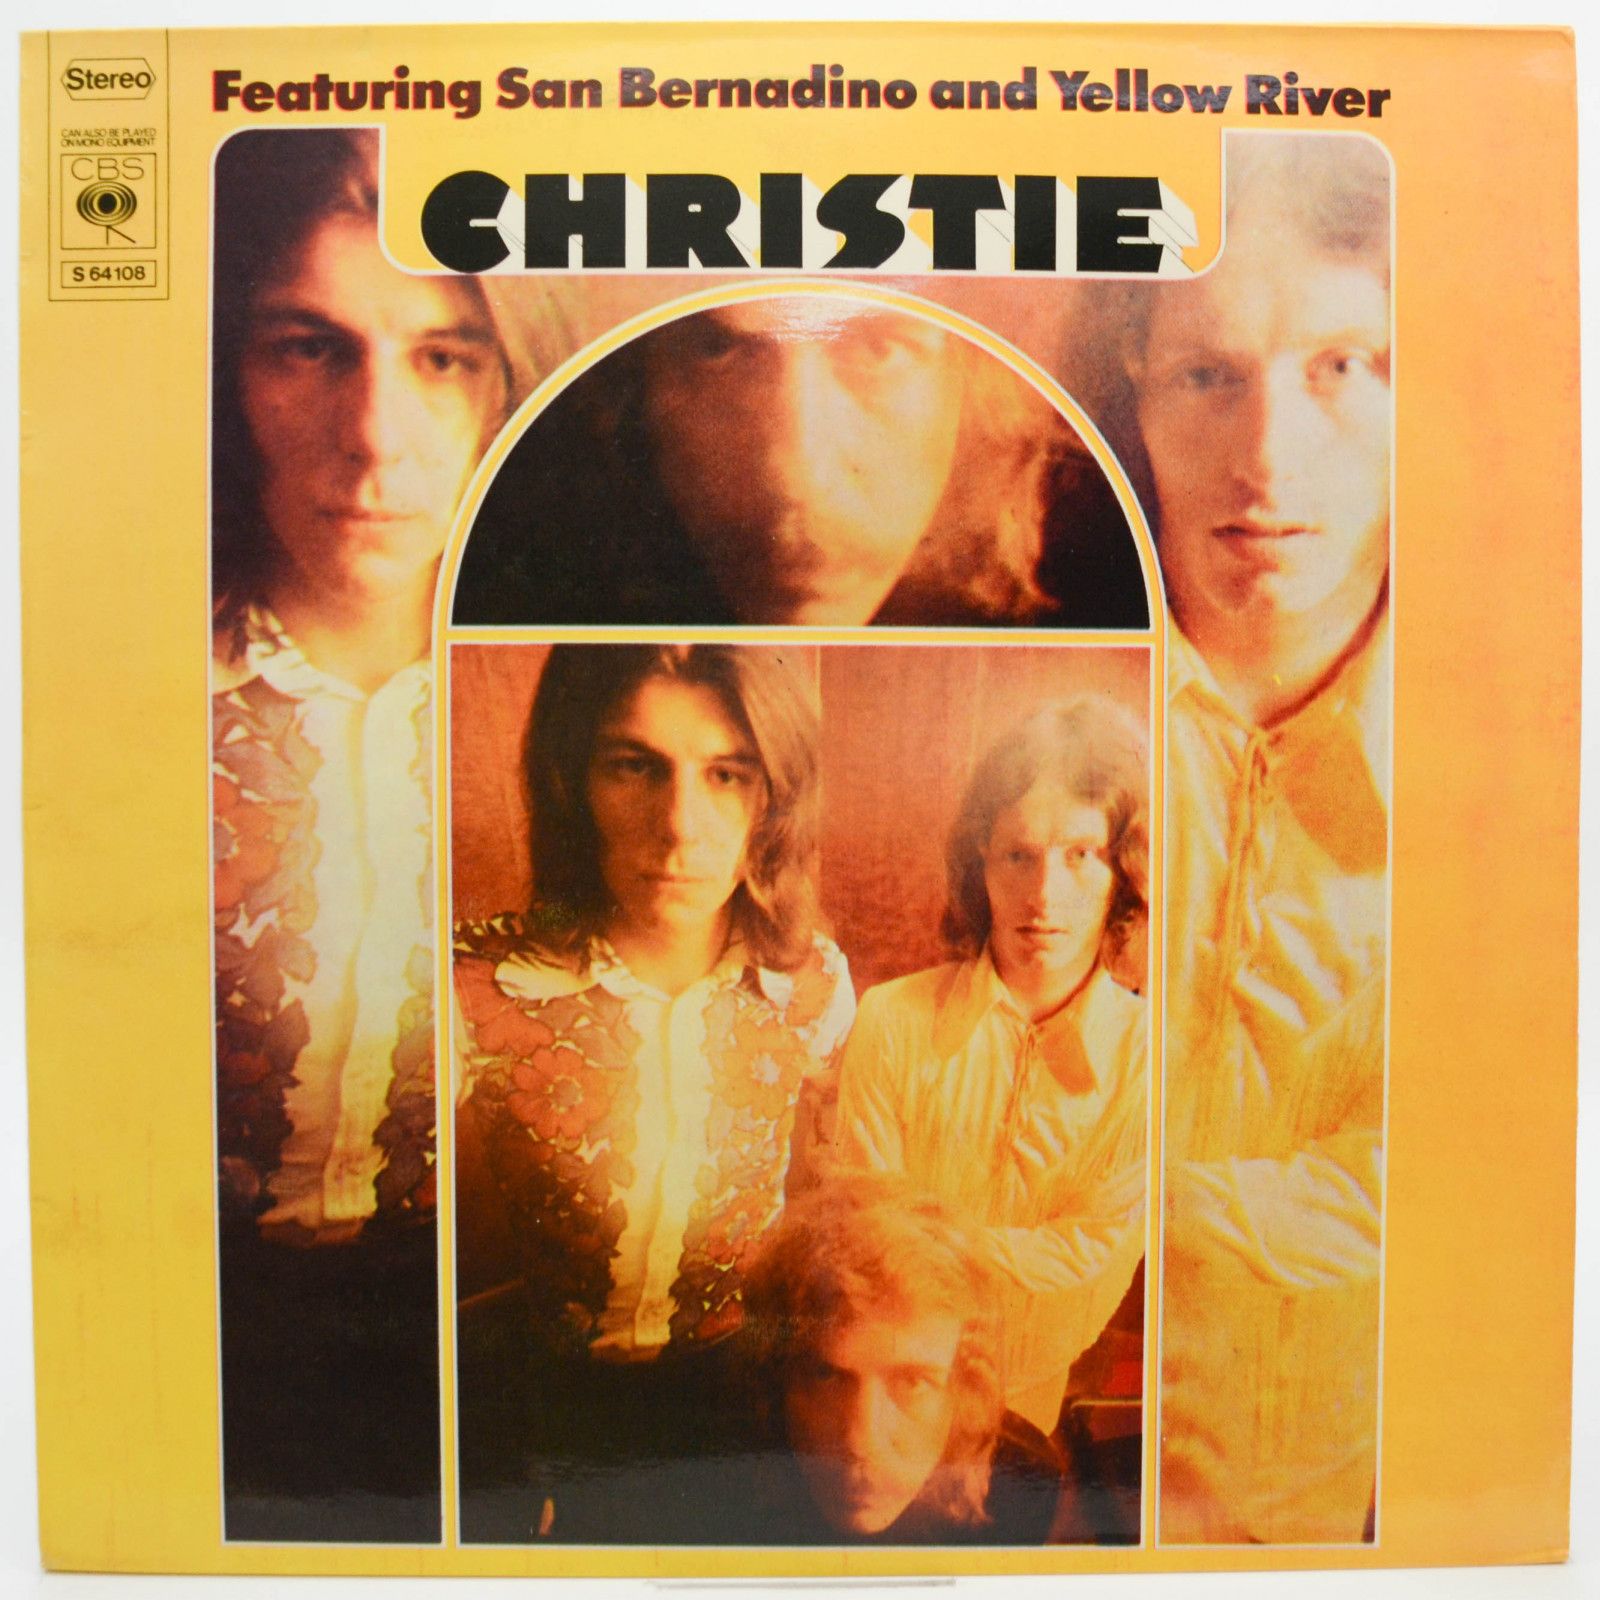 Christie — Christie, 1970